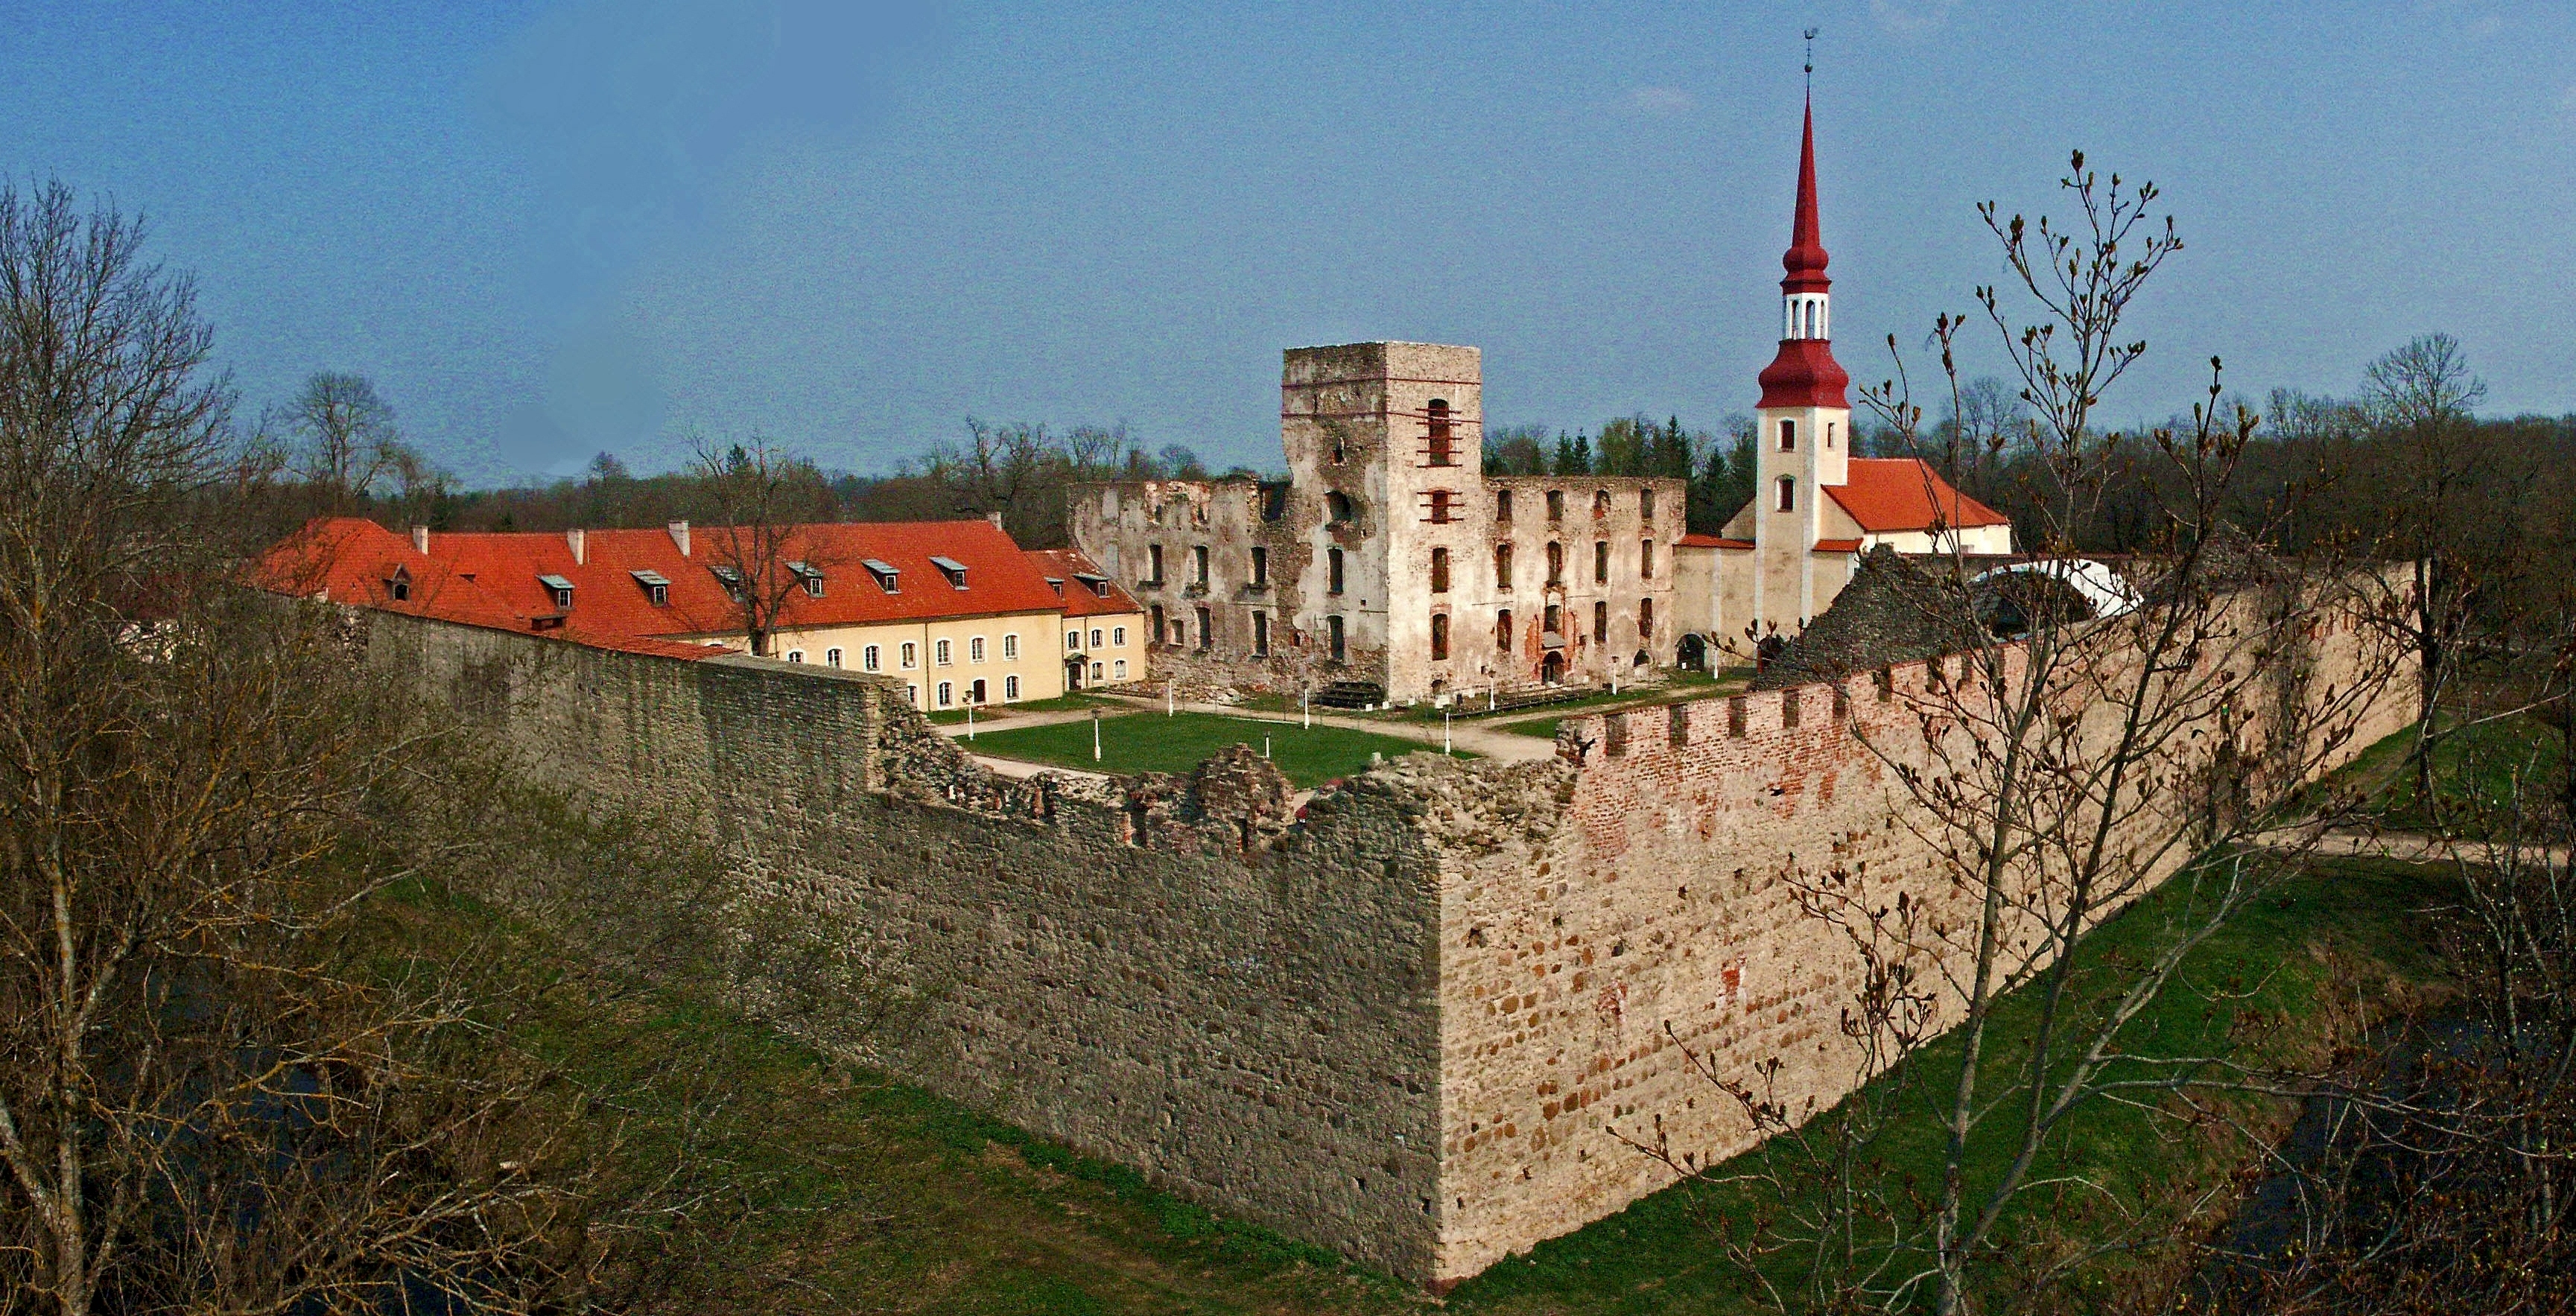 Põltsamaa Castle - Wikipedia